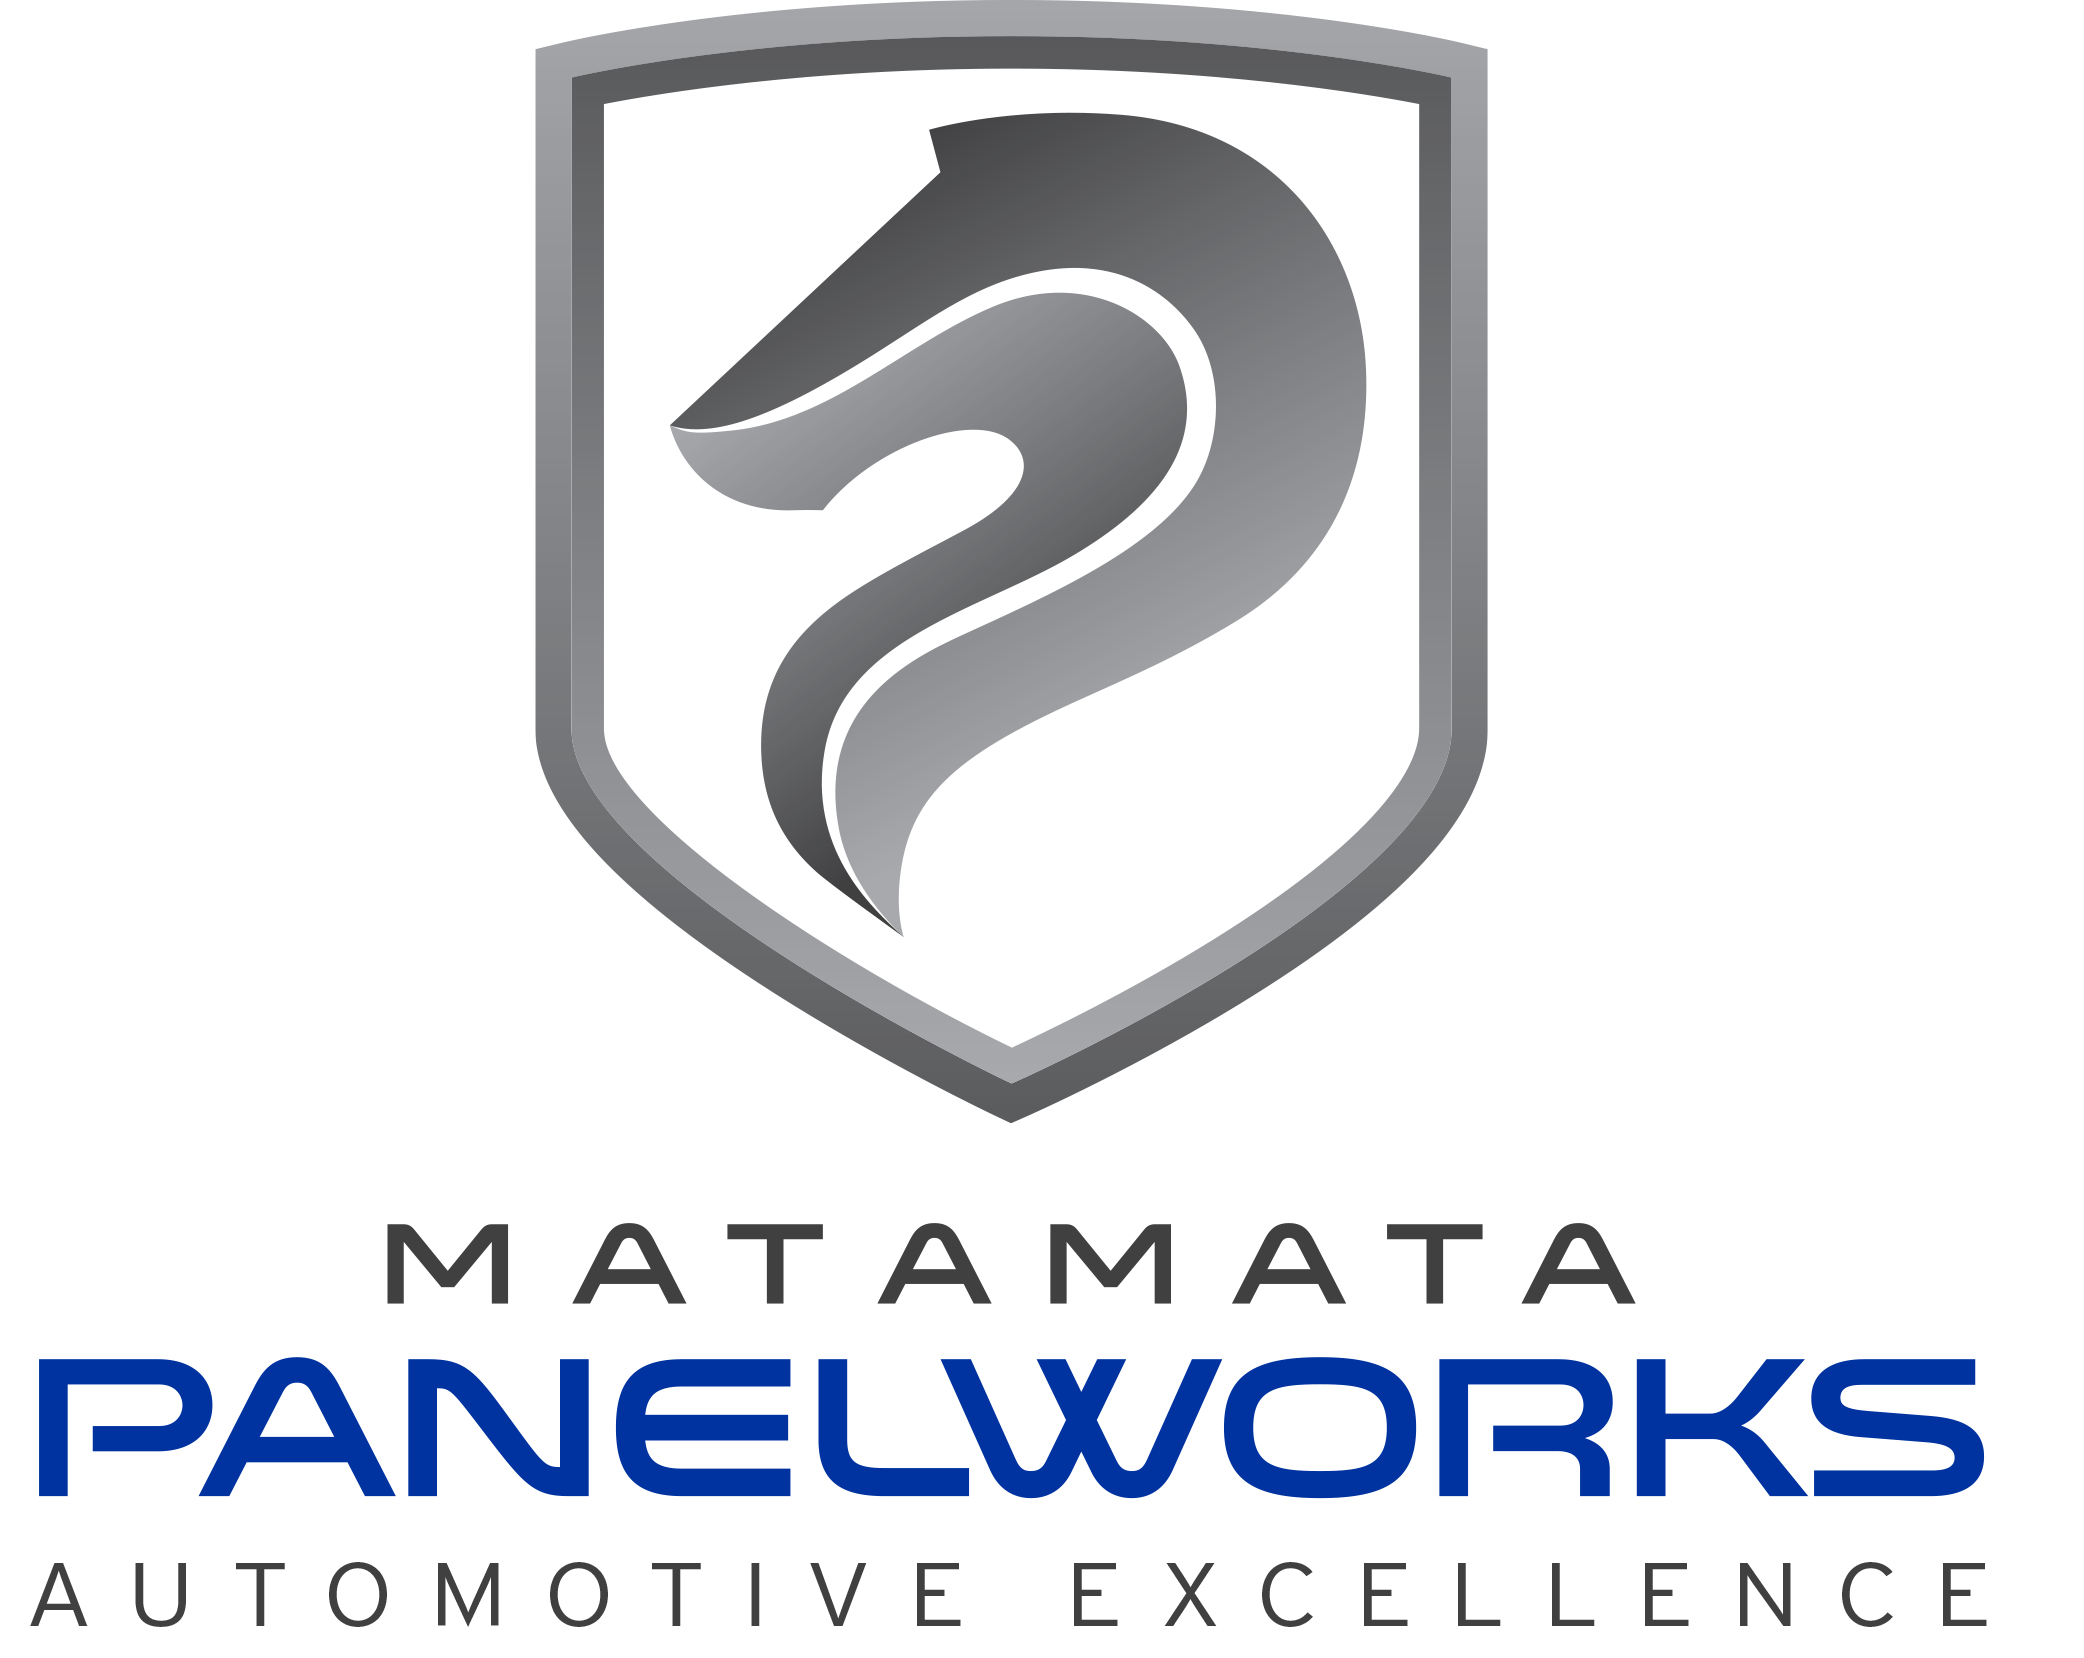 Matamata Panelworks